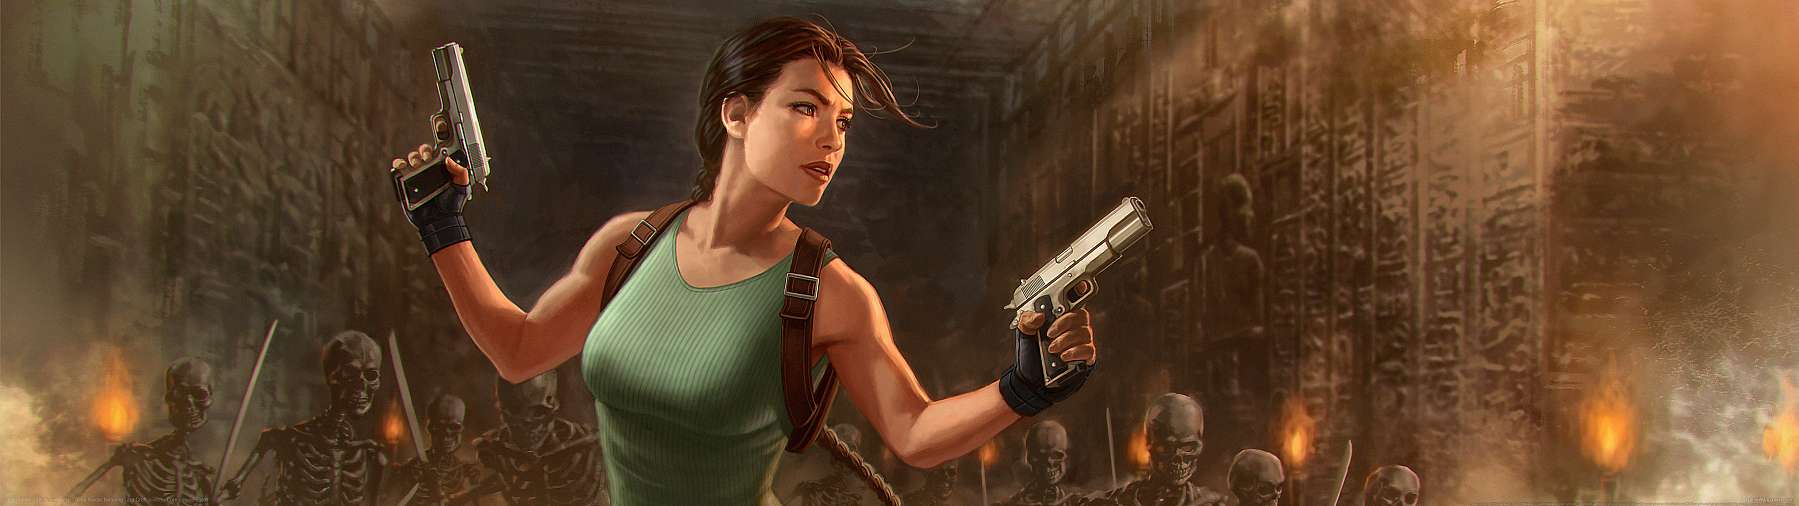 Tomb Raider 25th Anniversary superwide fond d'cran 02